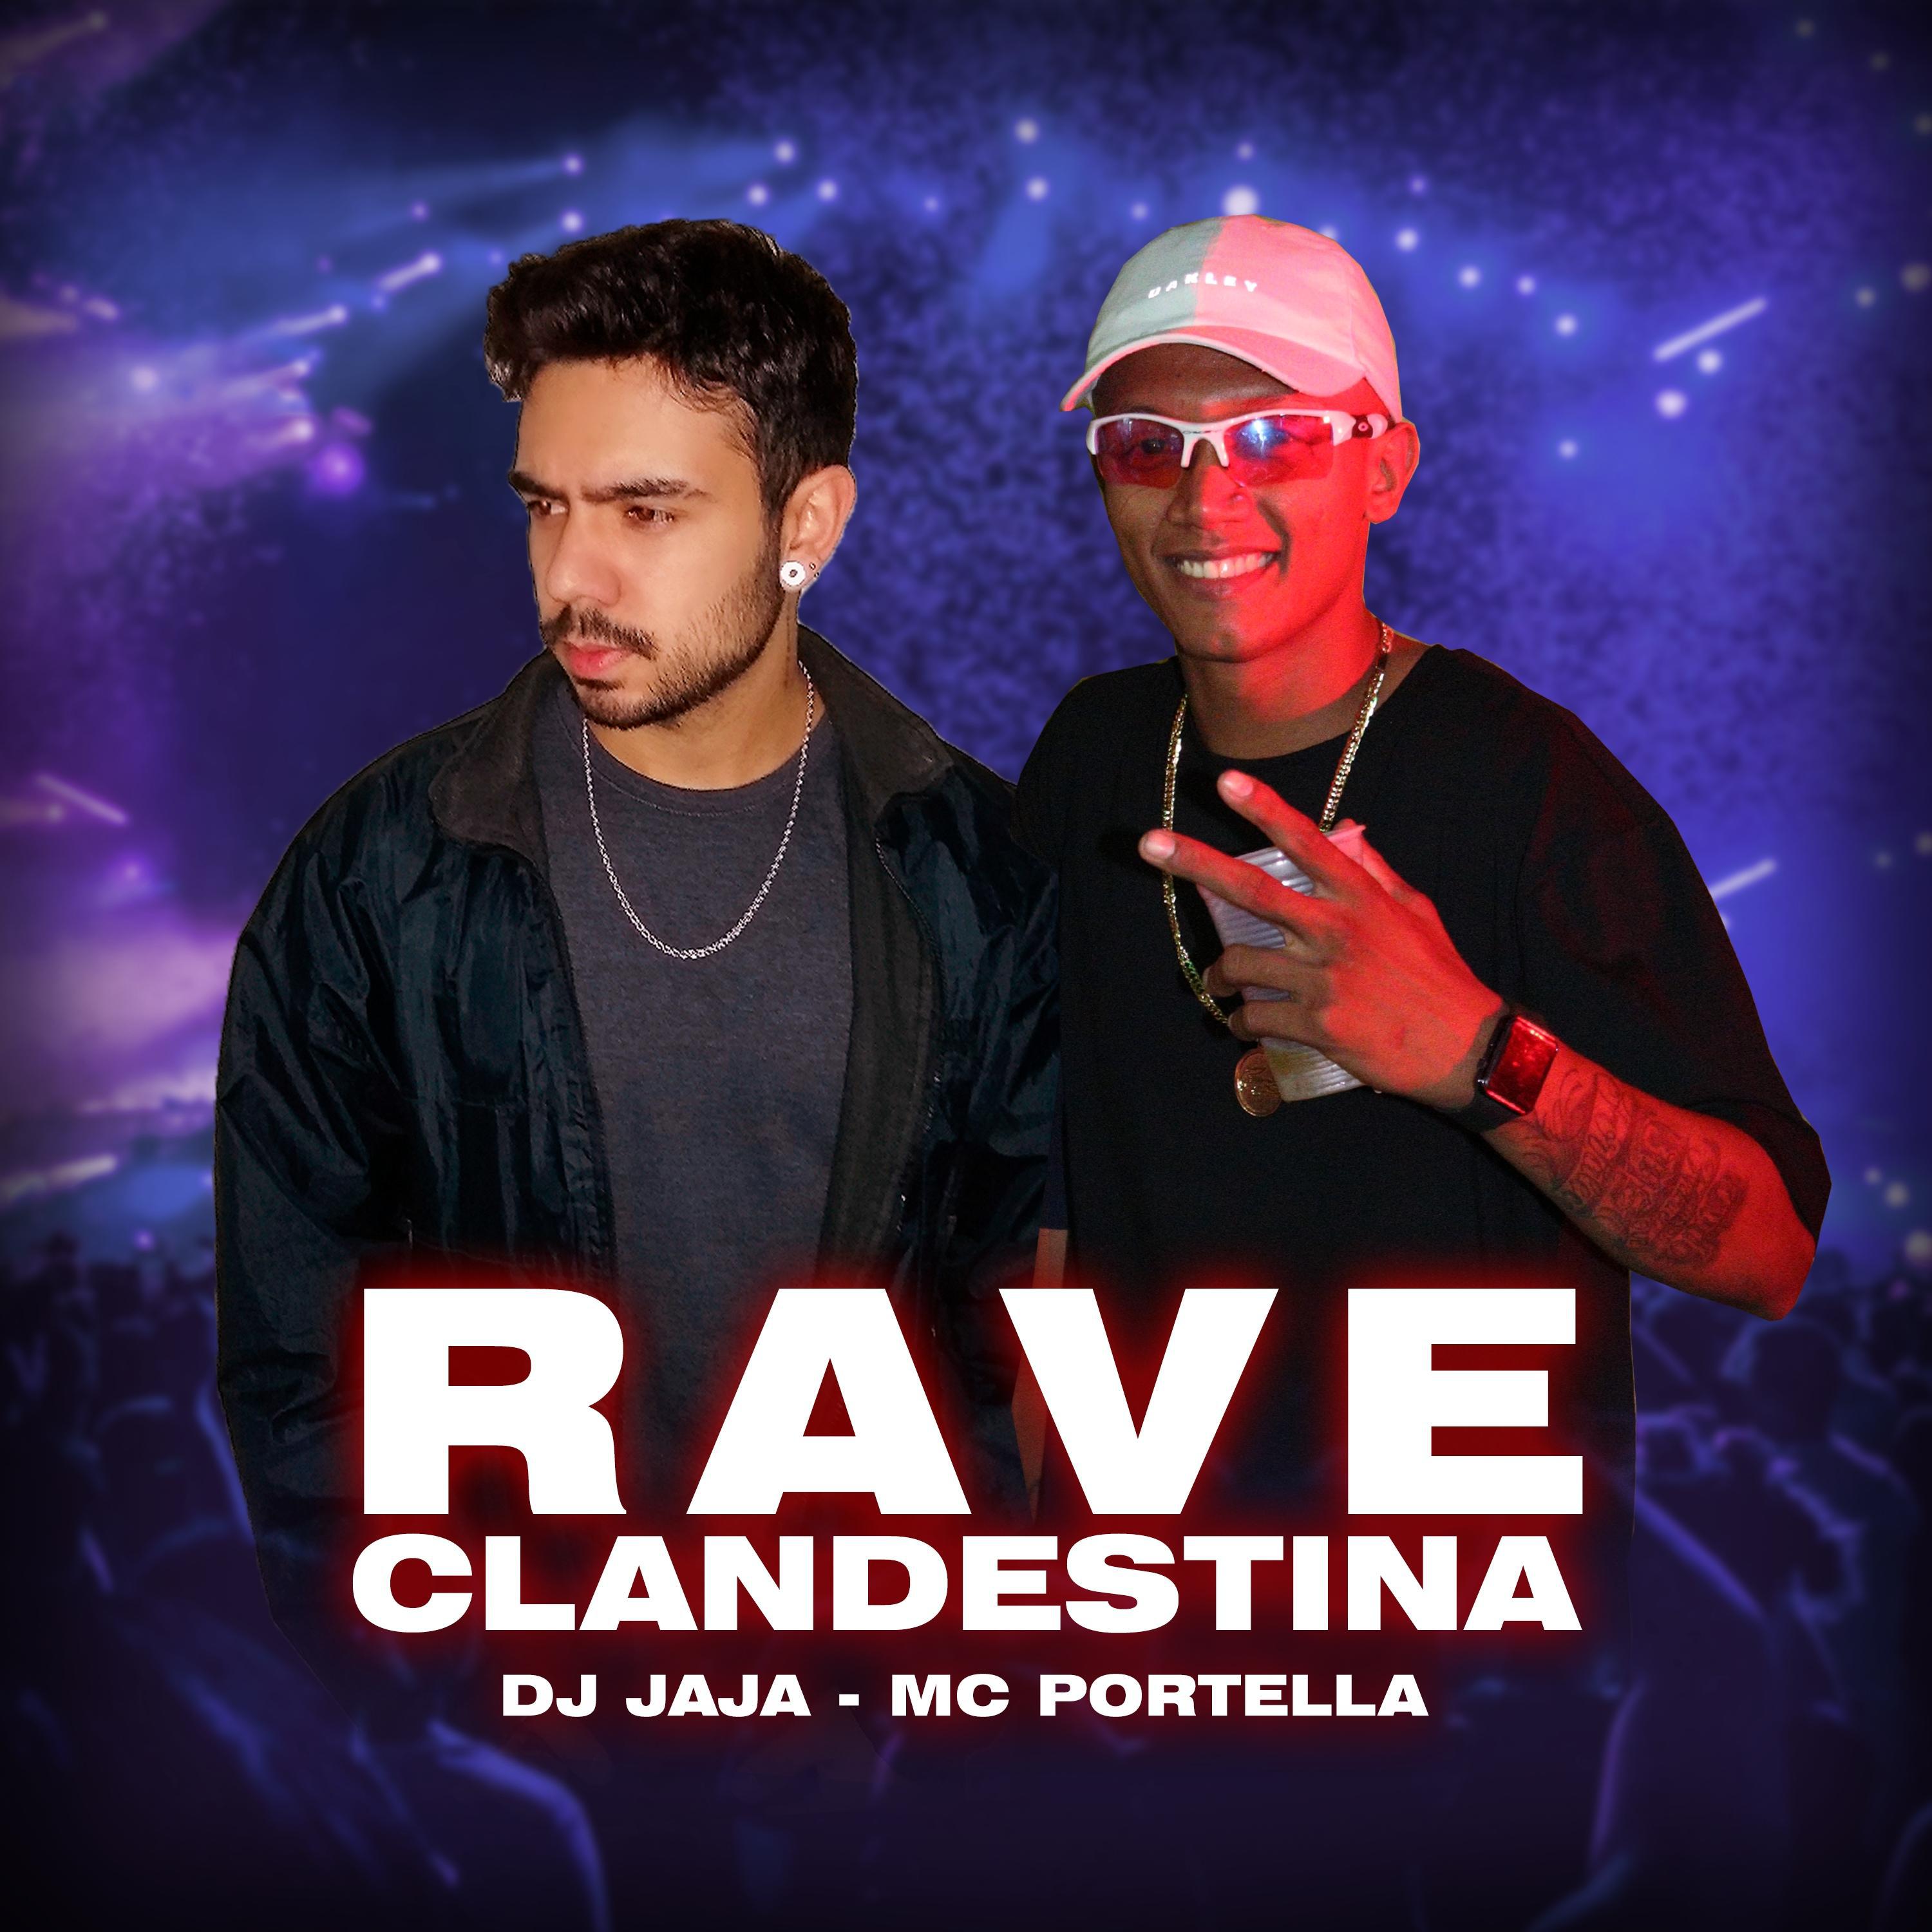 Dj Jaja - Rave Clandestina (feat. Mc Portella)